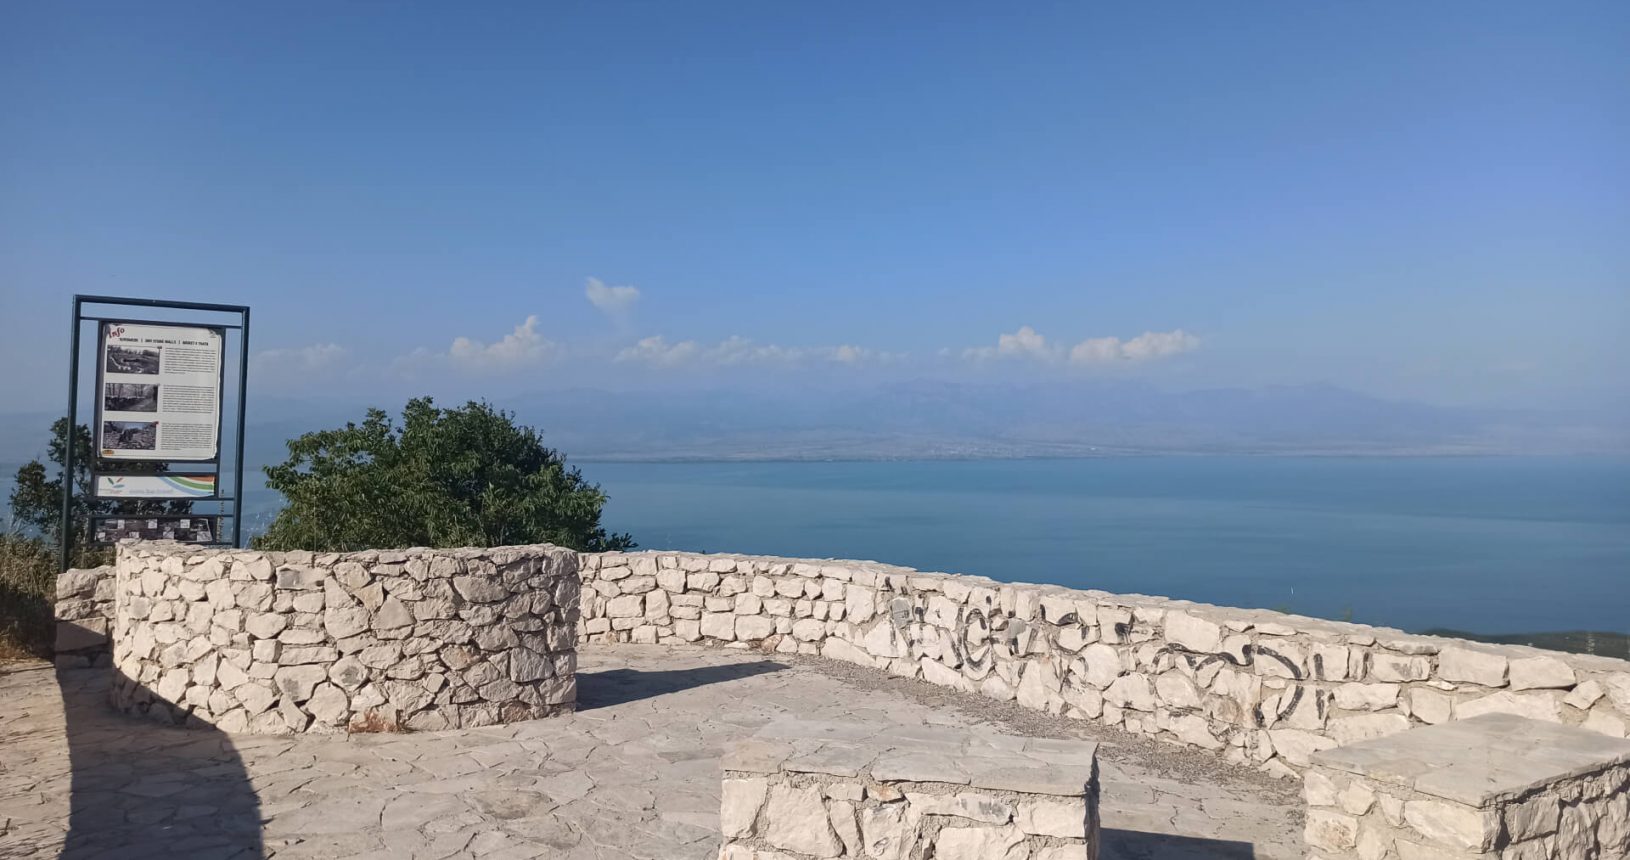 Stony observation point at Viewpoint Livari